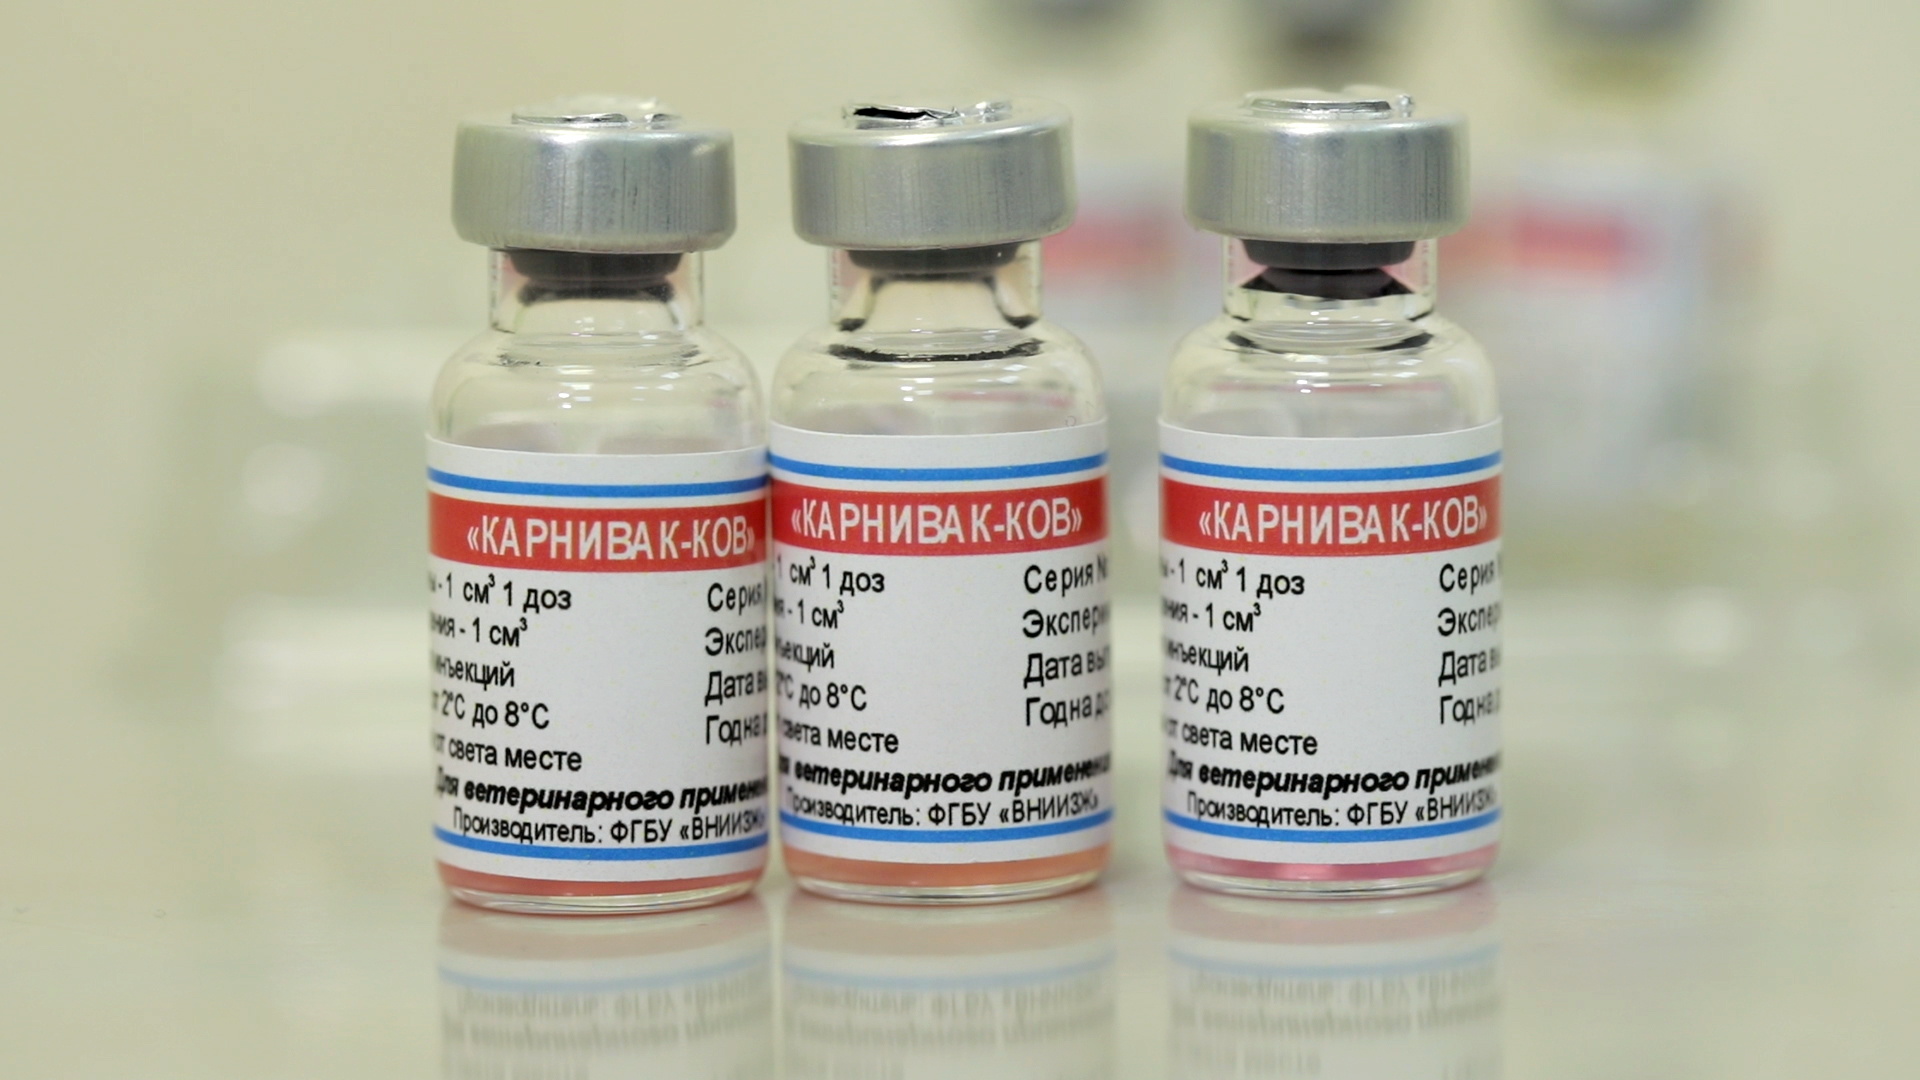 Russian regions begin vaccinating animals against COVID-19 - RIA | Reuters